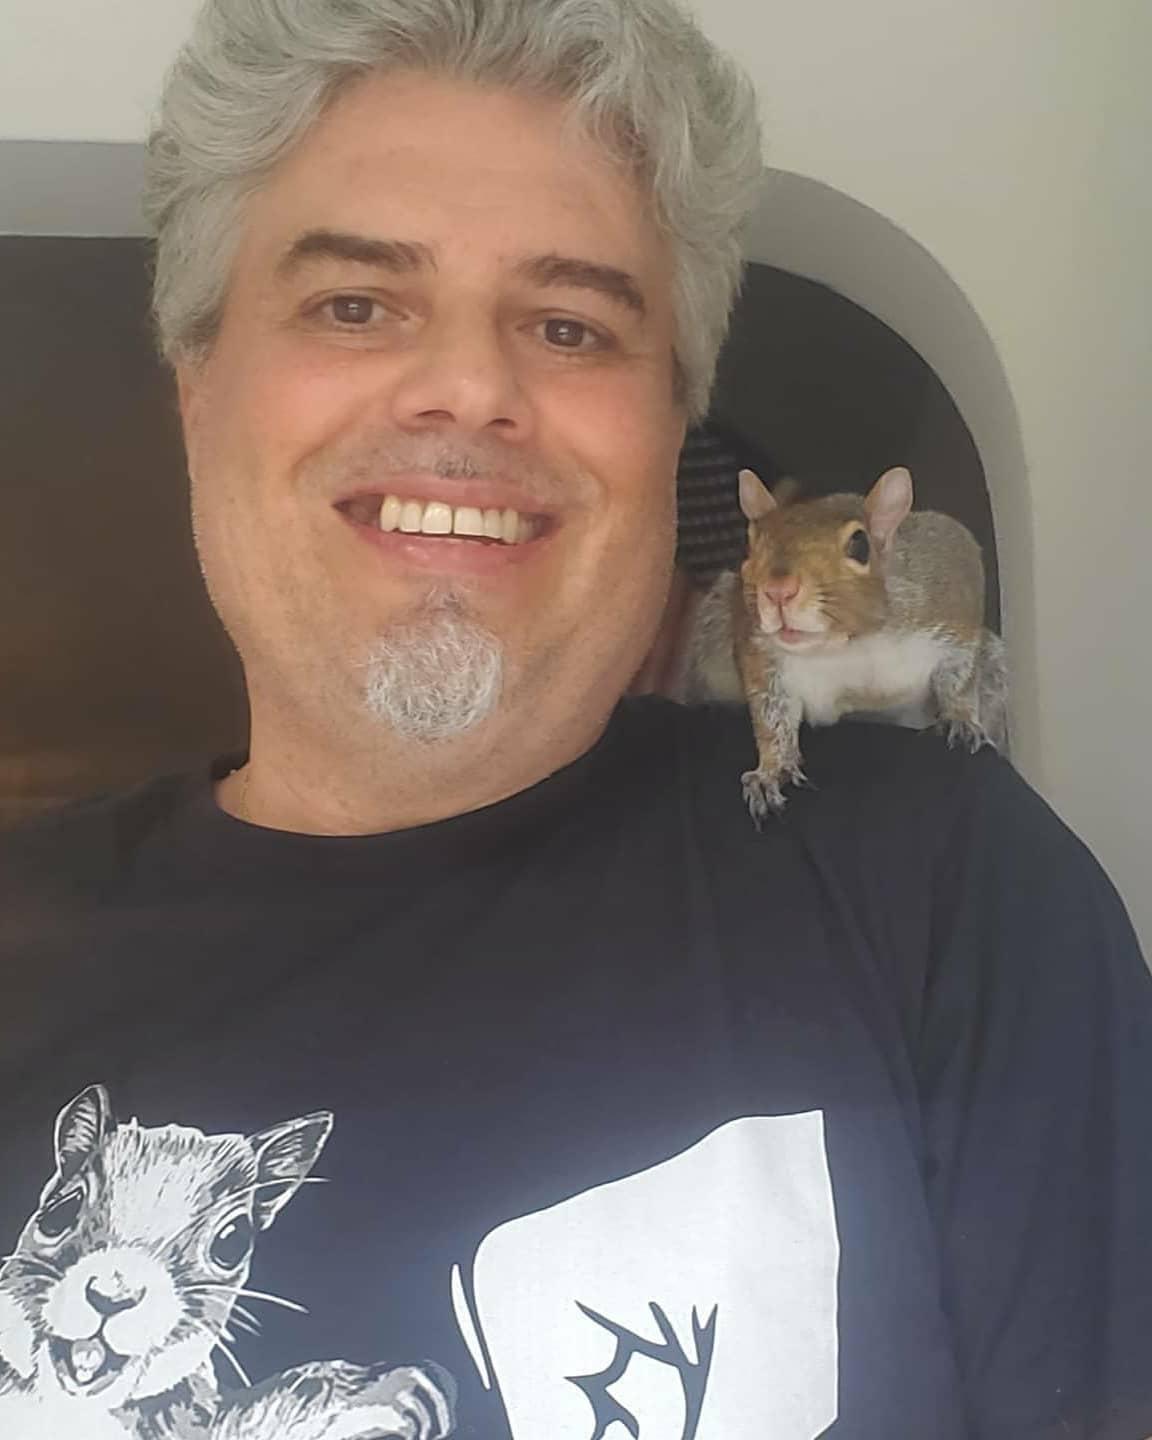 (Courtesy of <a href="https://www.instagram.com/stella.da.squirrel/">Paul Materasso</a>)